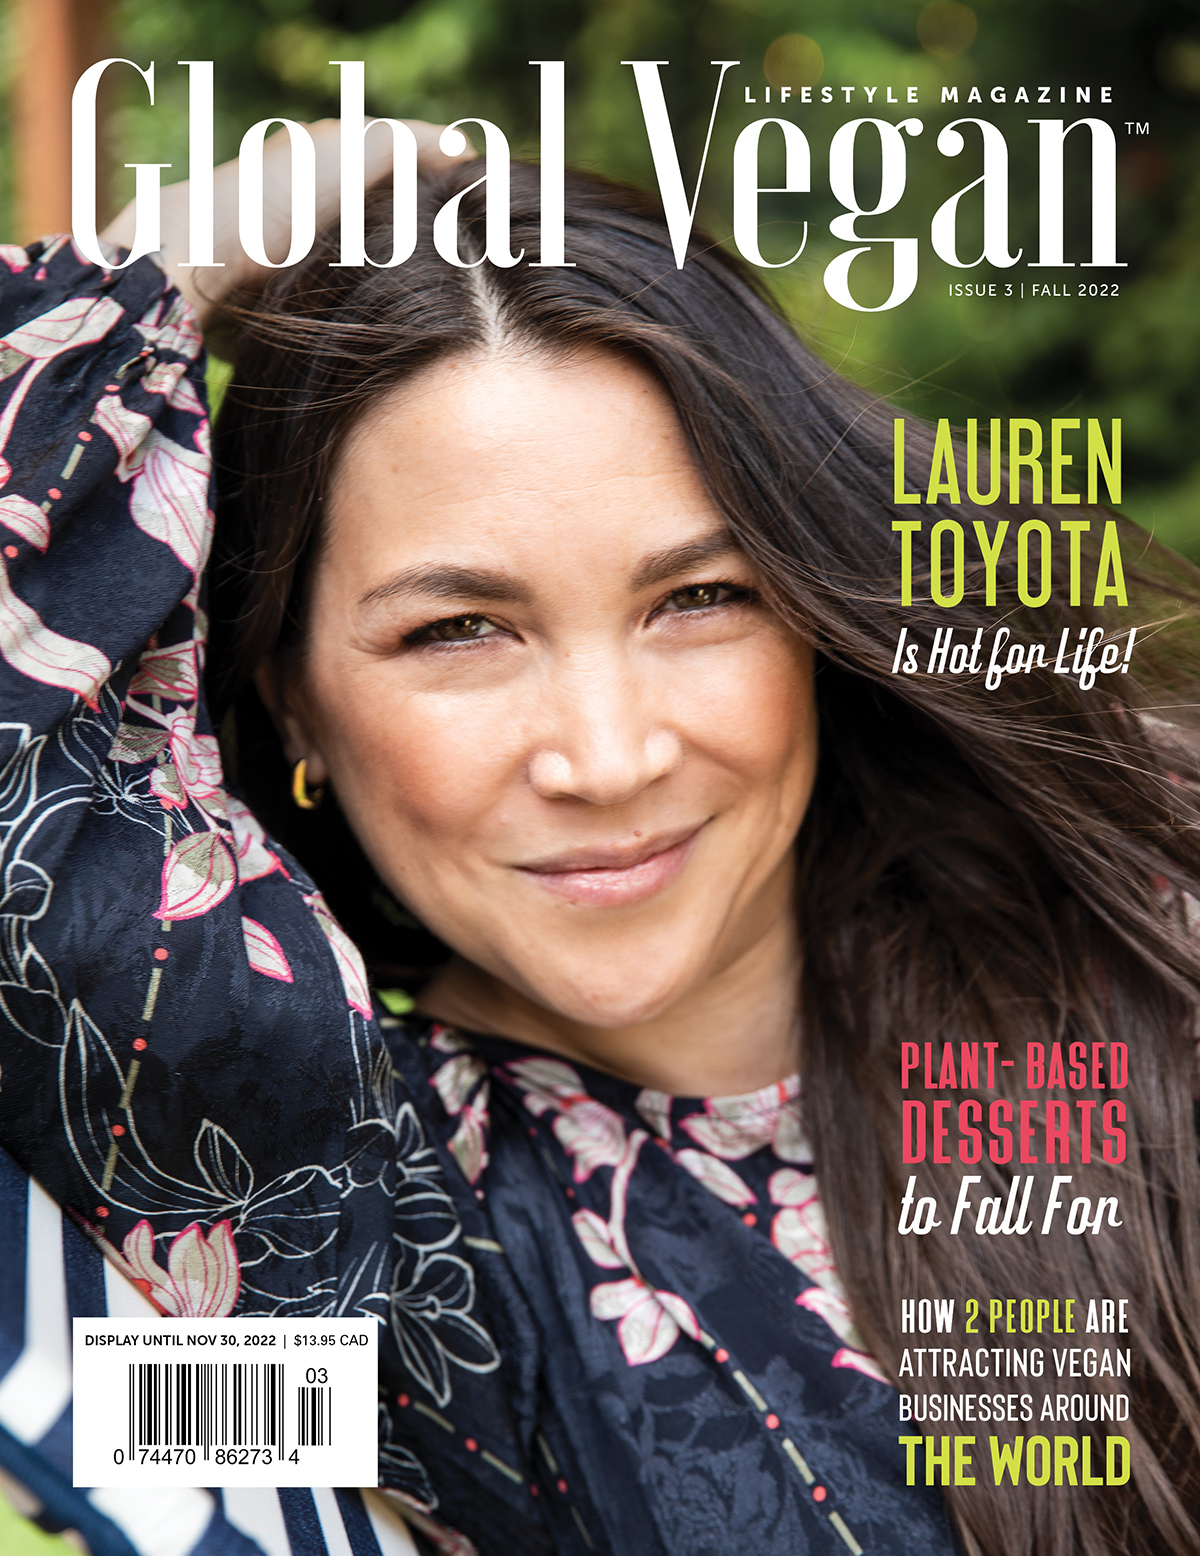 Global Vegan Magazine